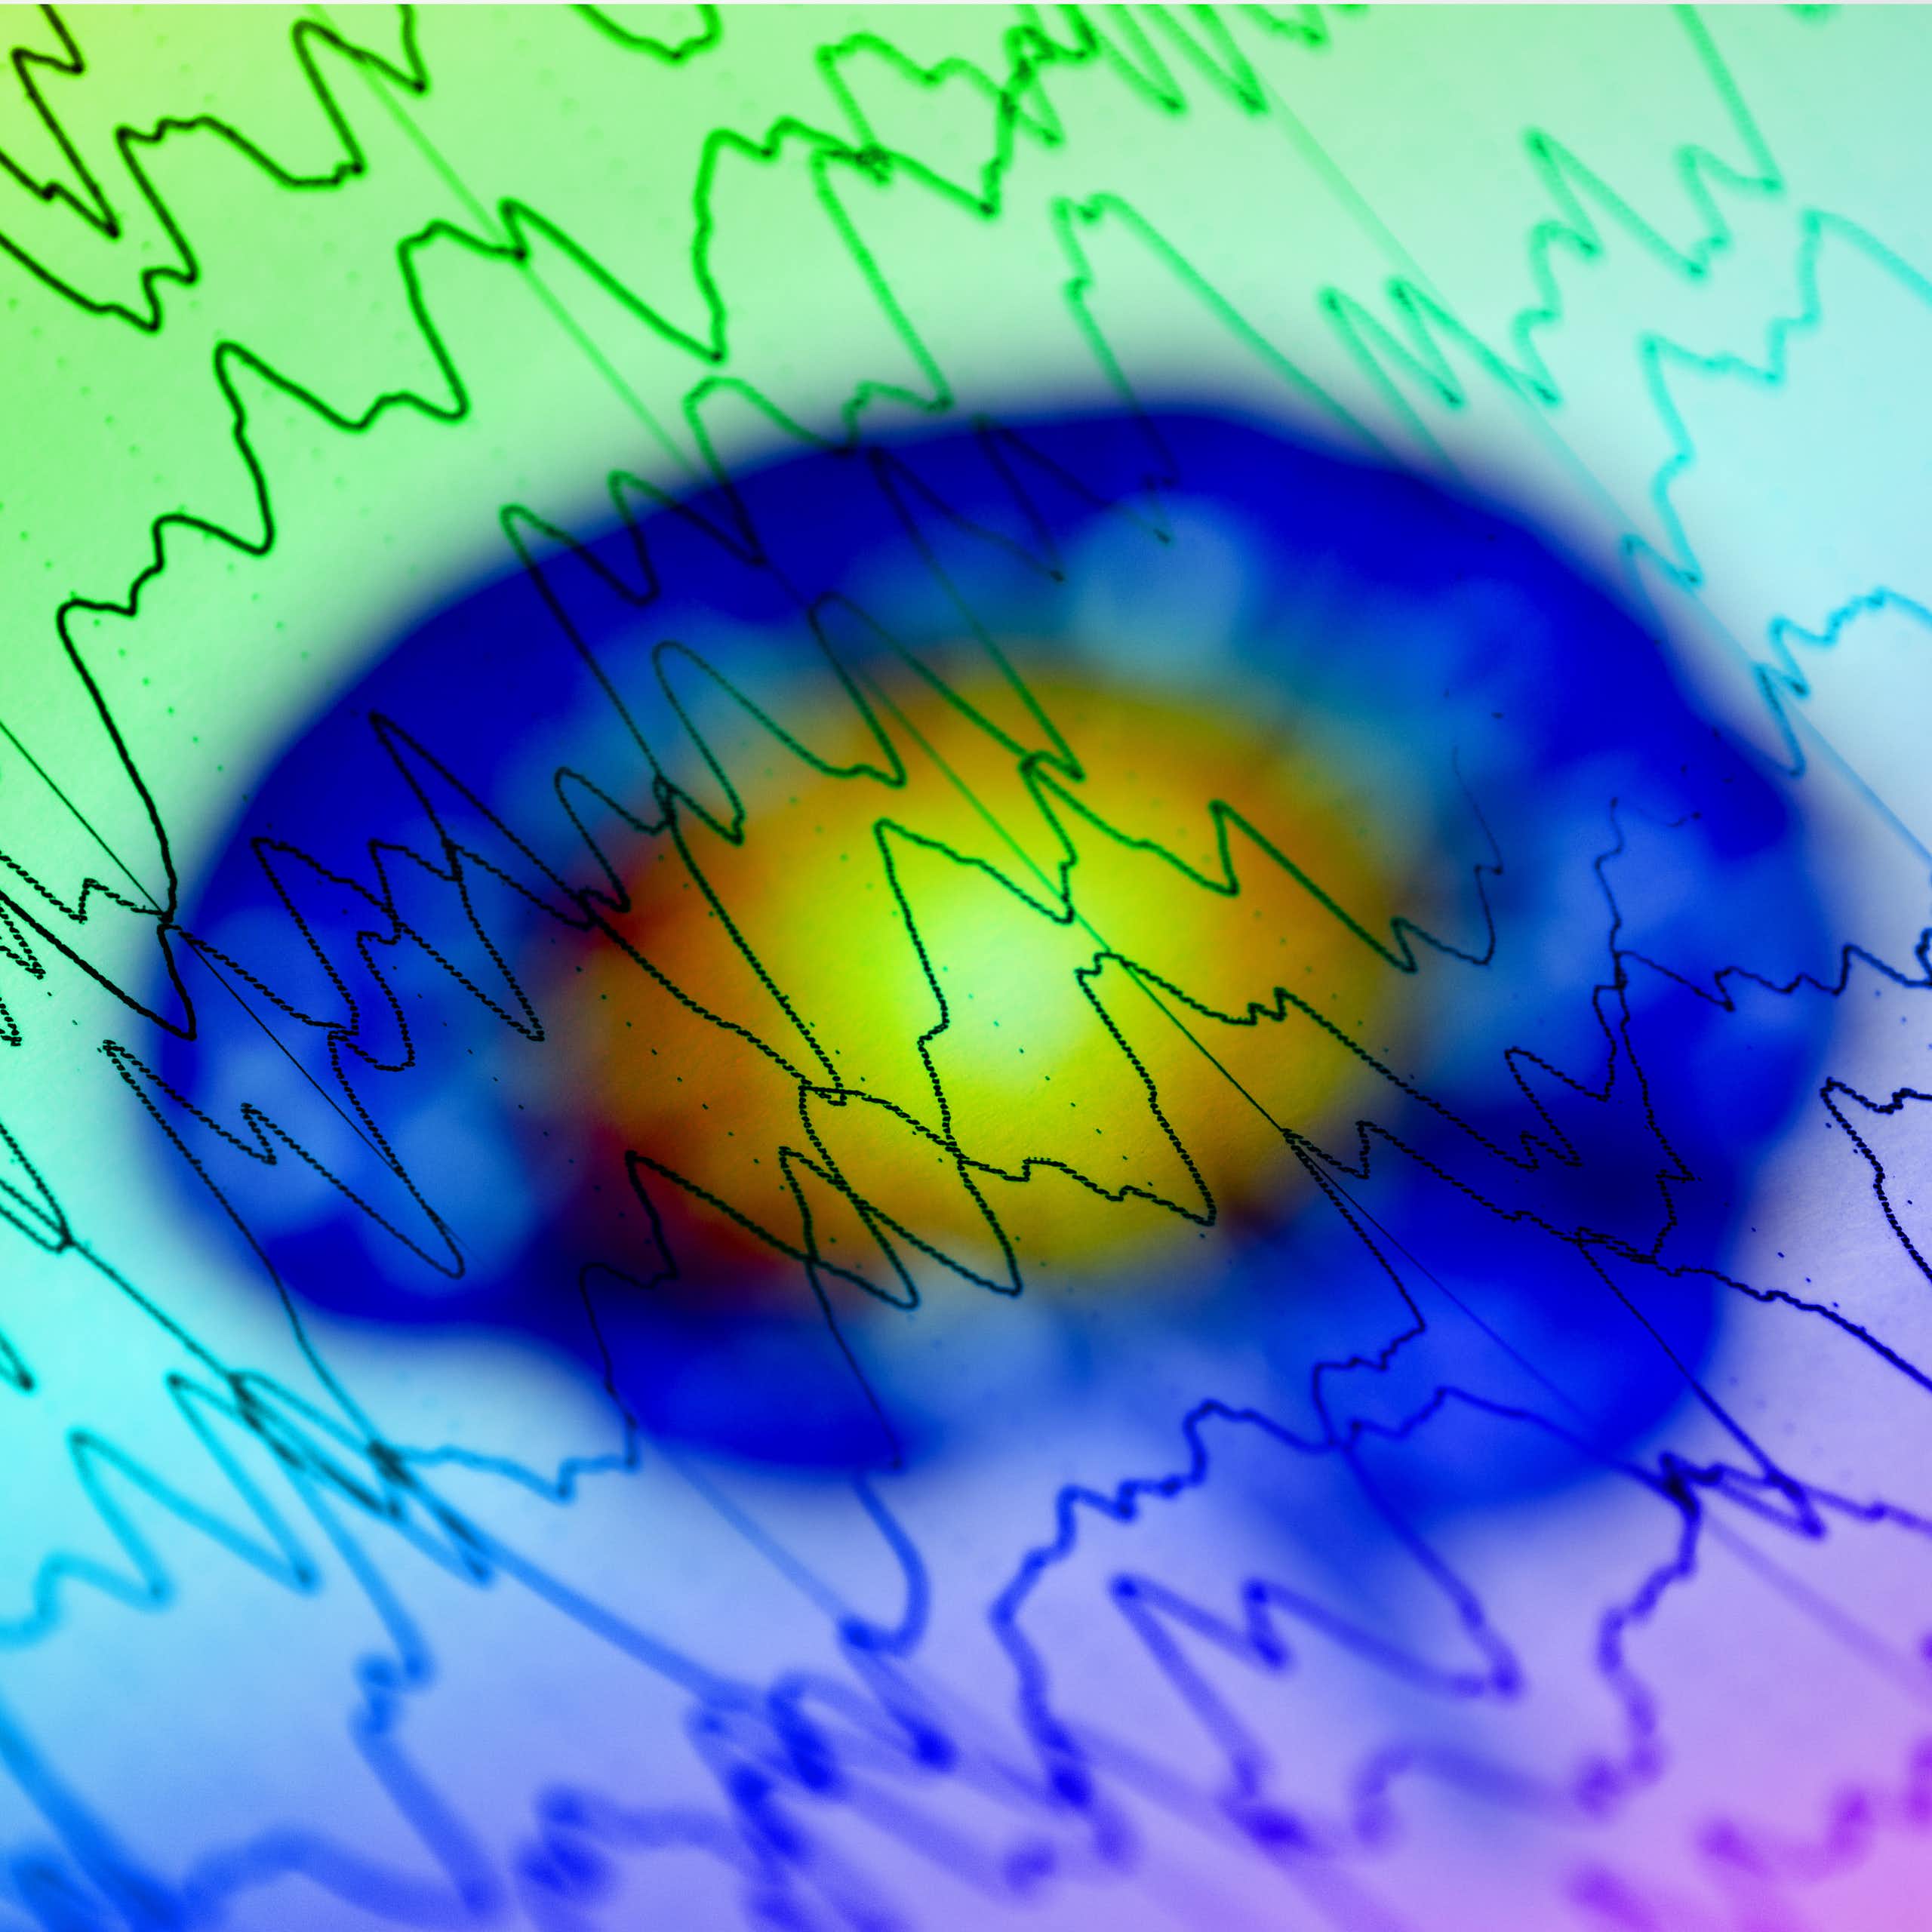 data waves superimposed on colourful brain image